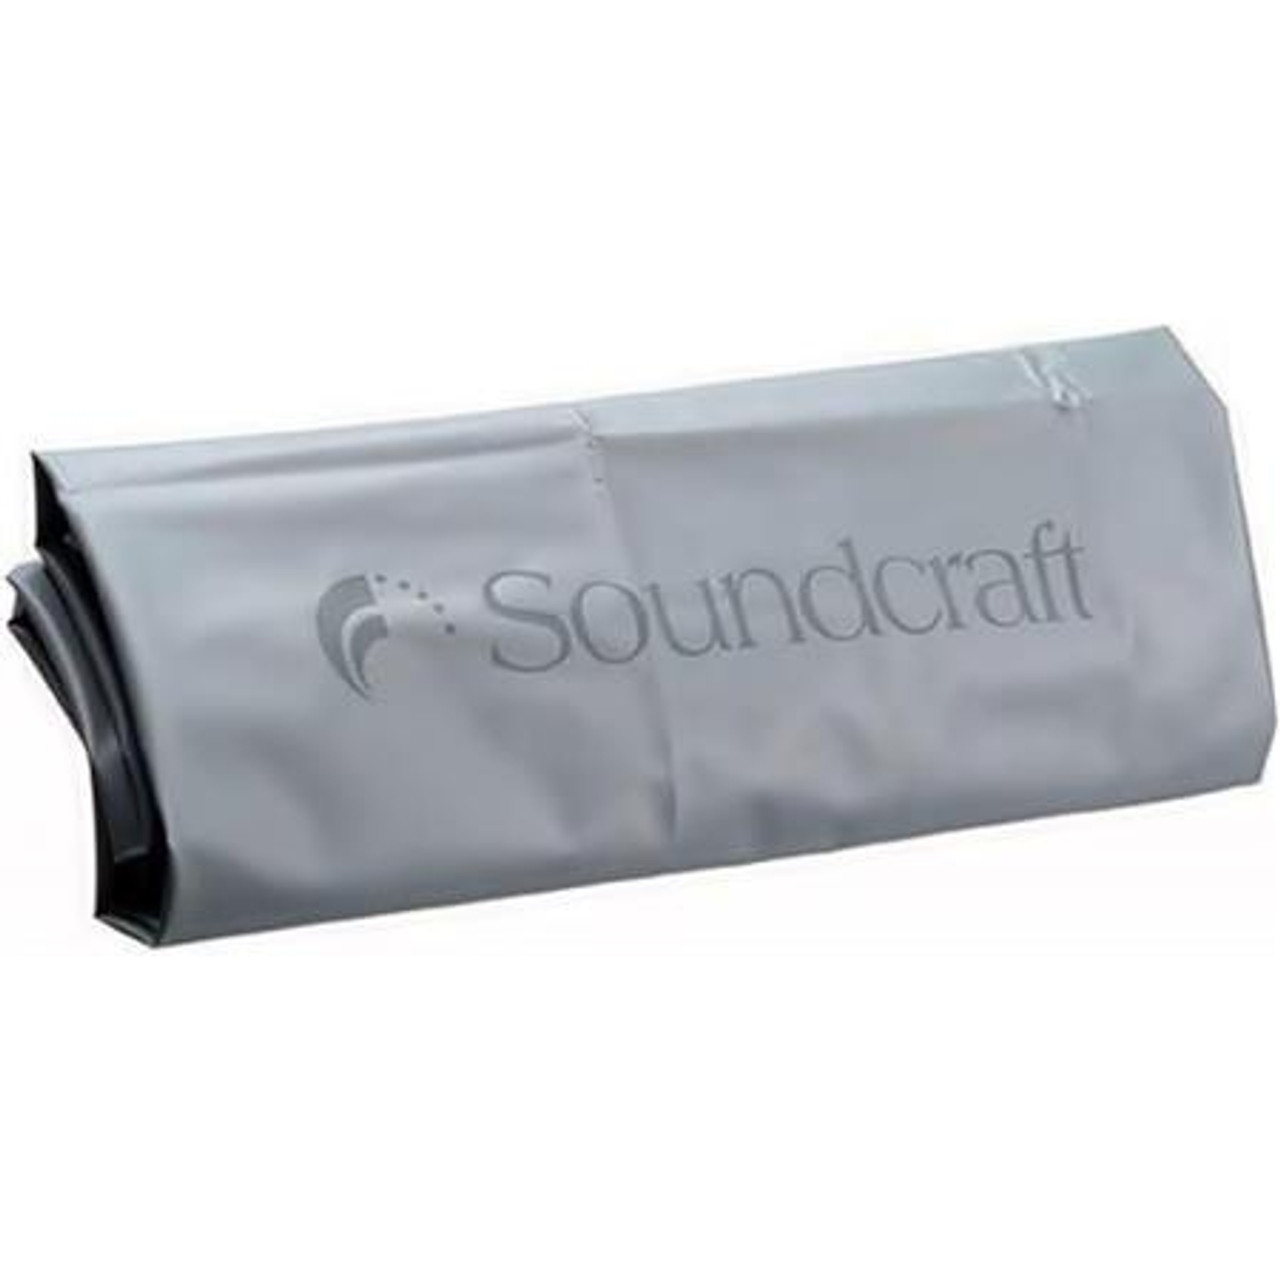 Soundcraft BF10.947008 VI1 Dustcover